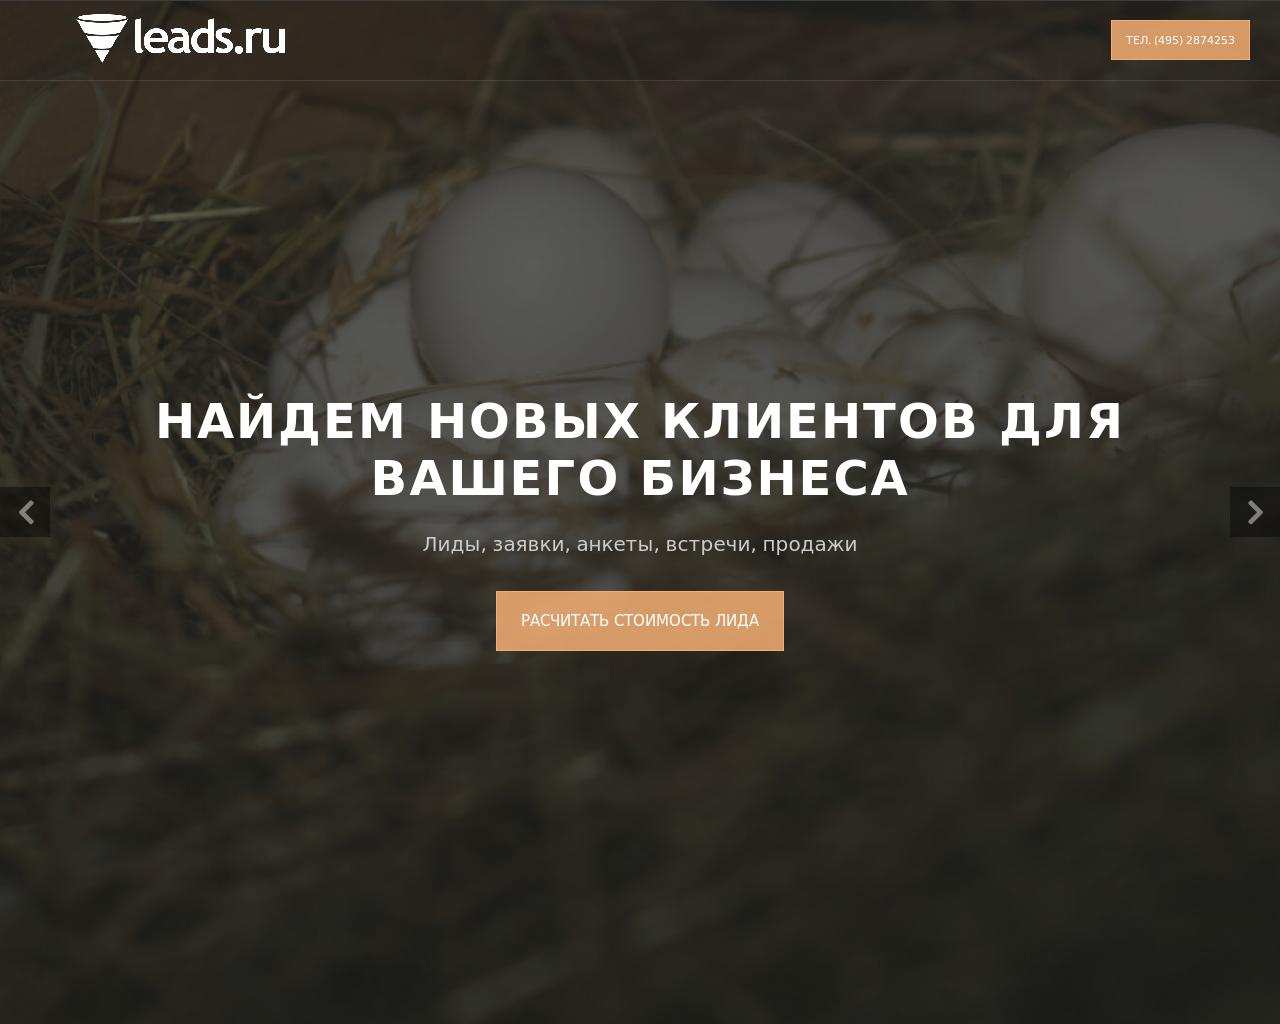 Изображение сайта leads.ru в разрешении 1280x1024